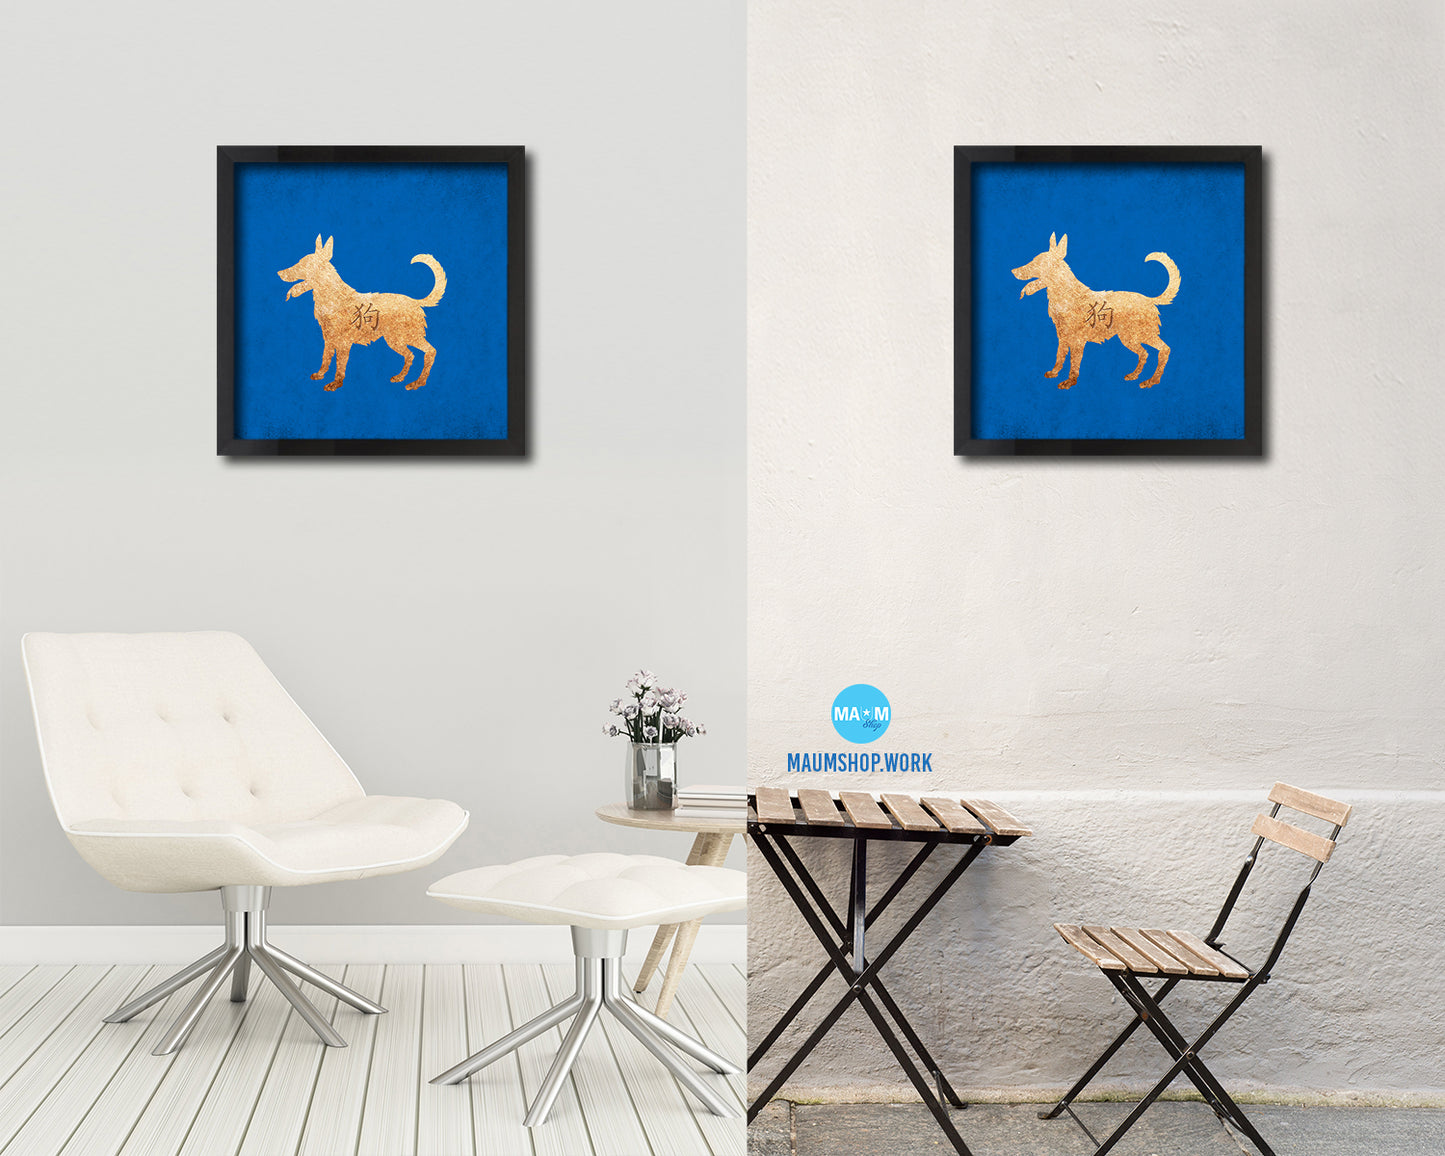 Dog Chinese Zodiac Character Wood Framed Print Wall Art Decor Gifts, Blue